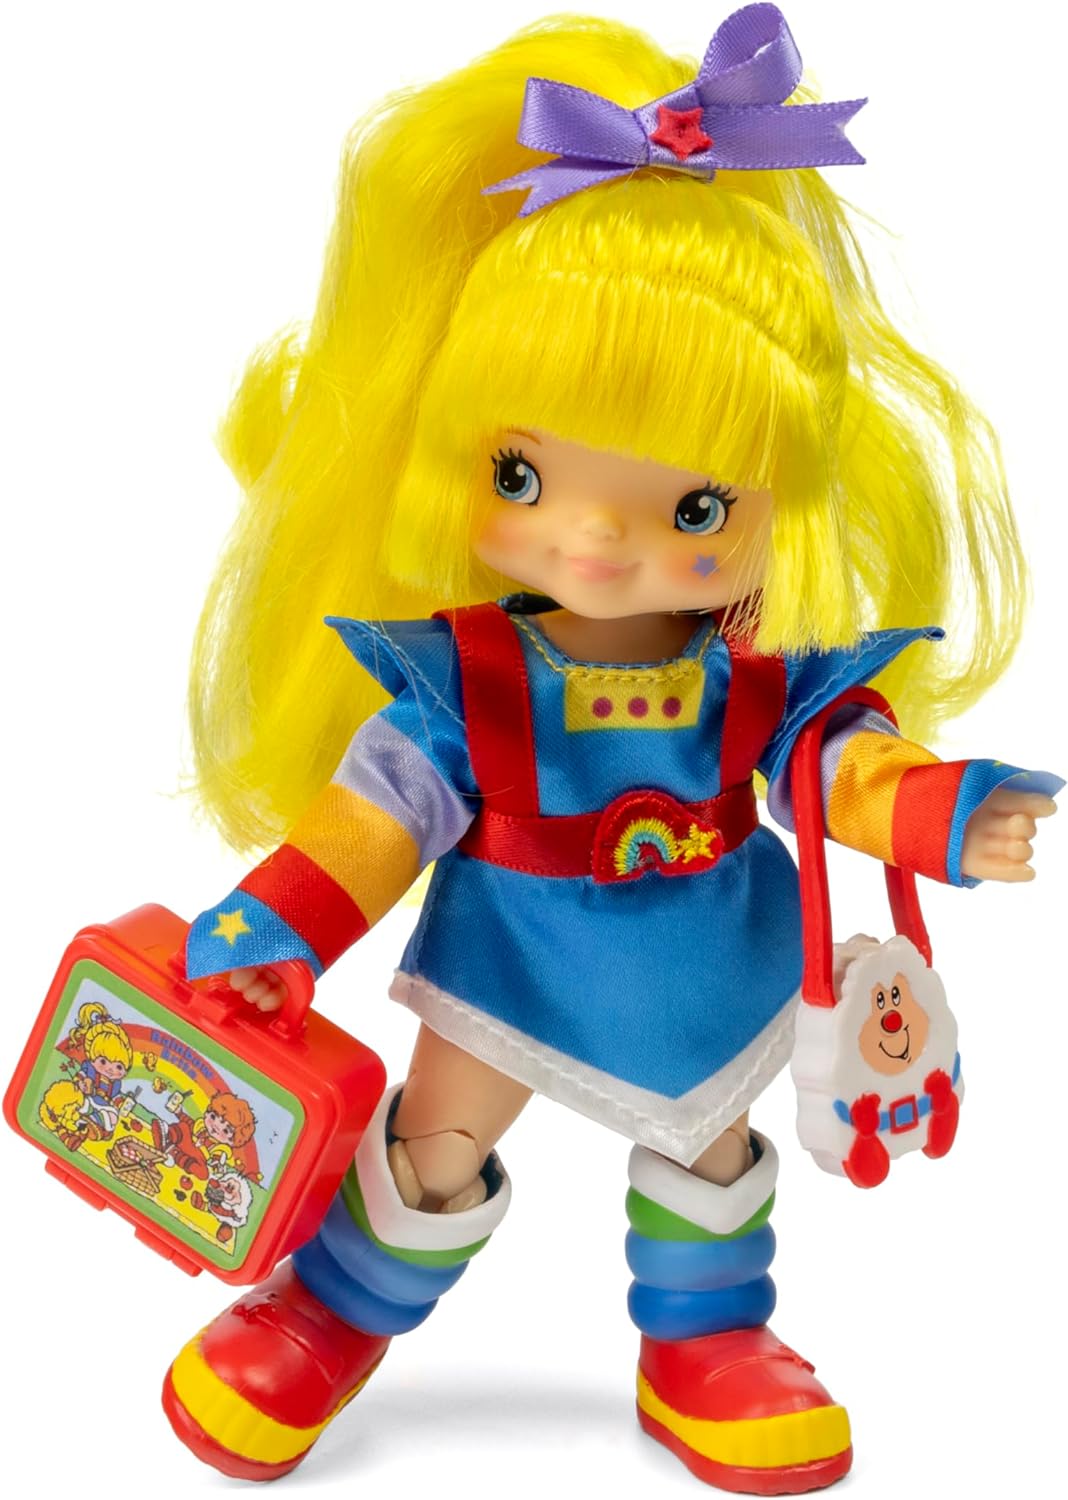 New Rainbow Brite dolls 2024 